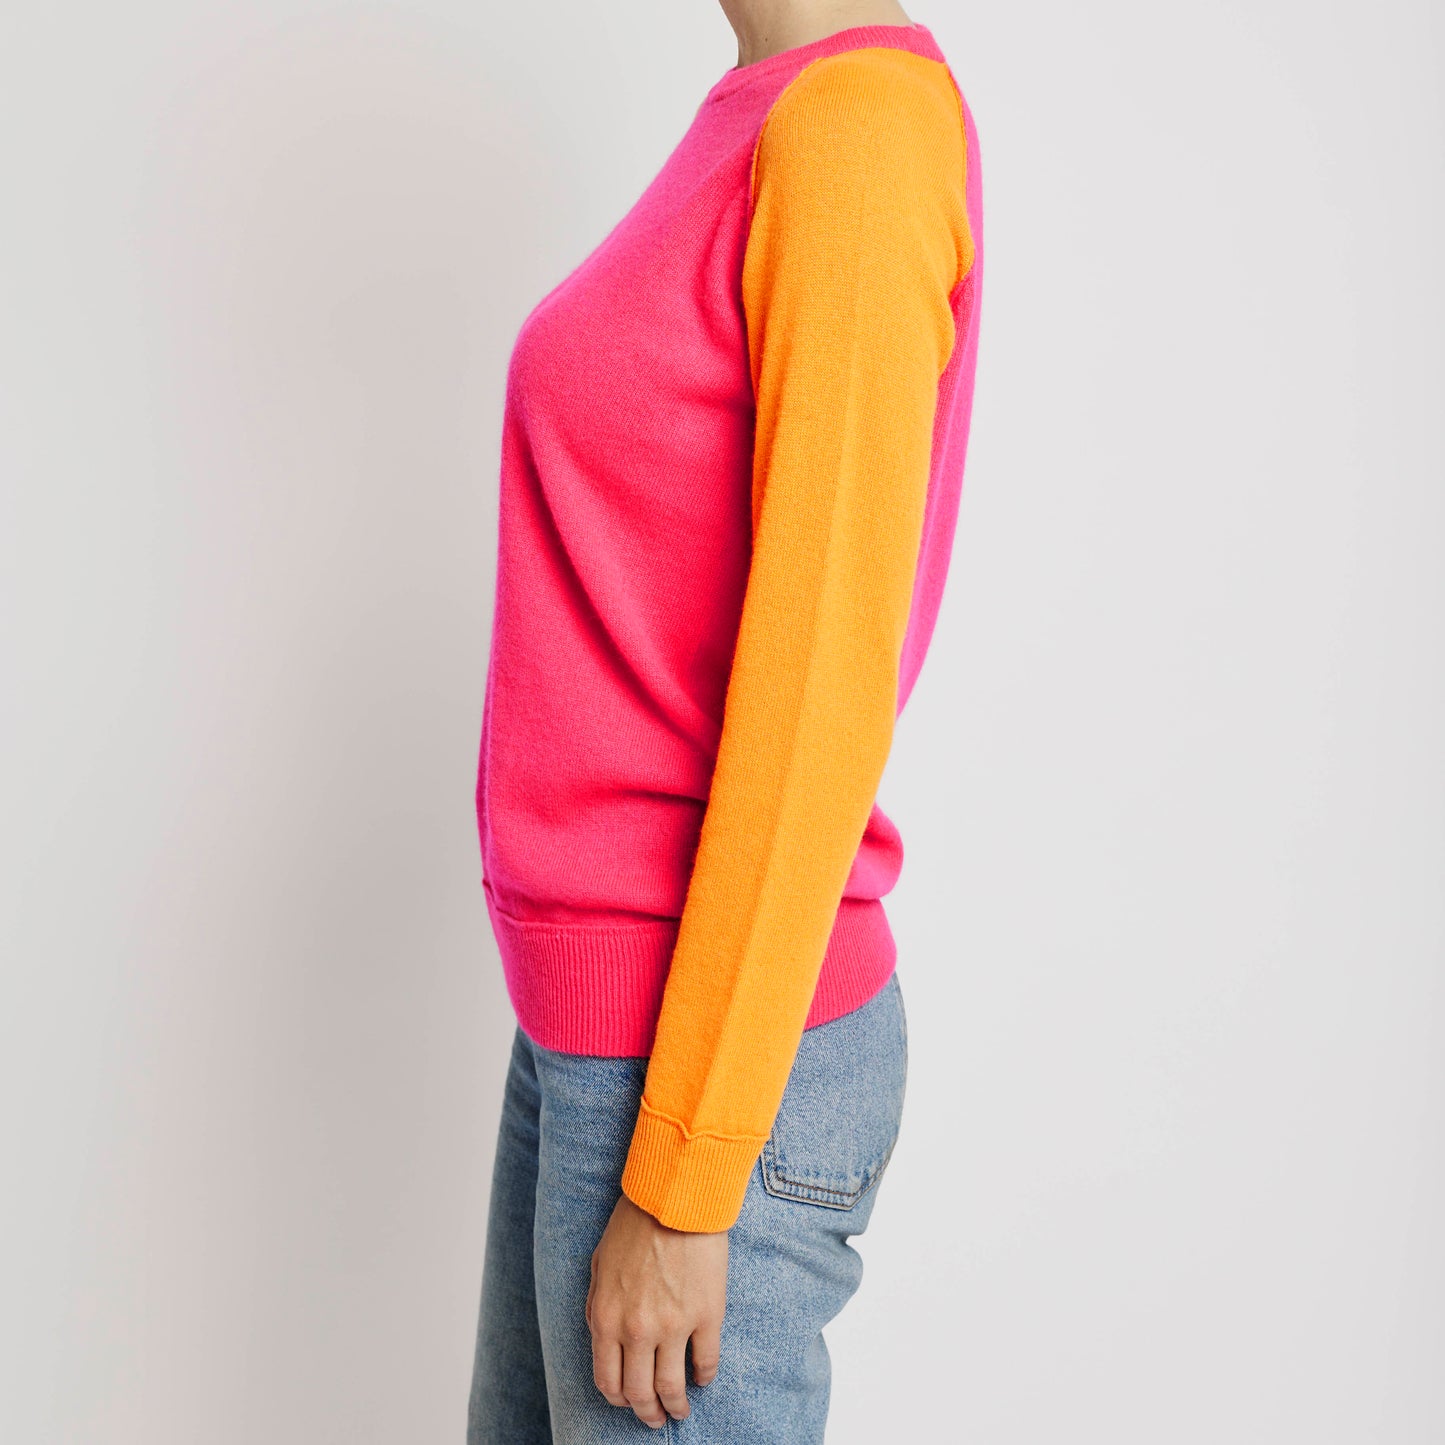 Le Sweatshirt Neon Pink & Orange